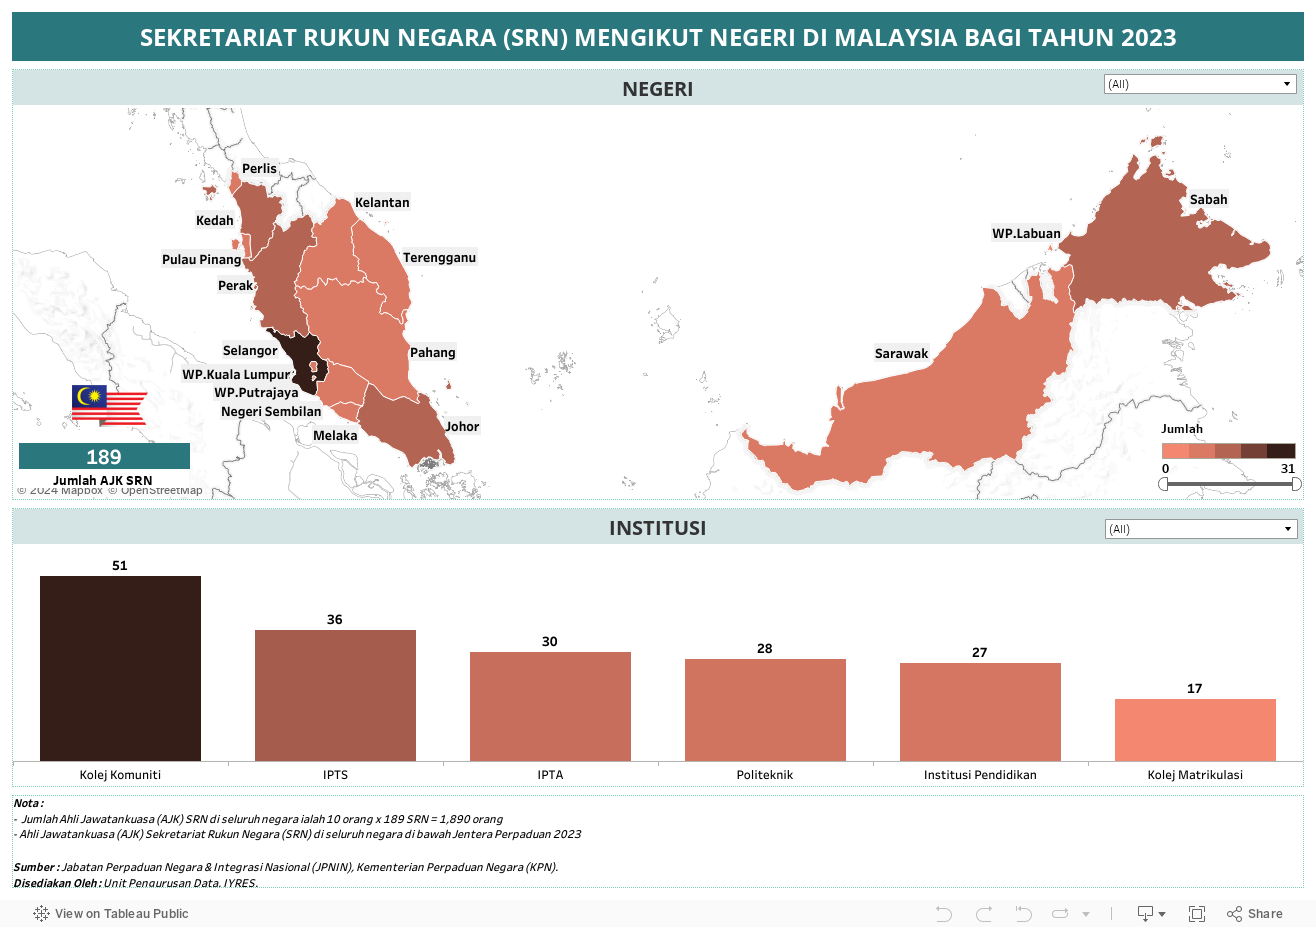 SEKRETARIAT RUKUN NEGARA (SRN) MENGIKUT NEGERI DI MALAYSIA BAGI TAHUN 2023 